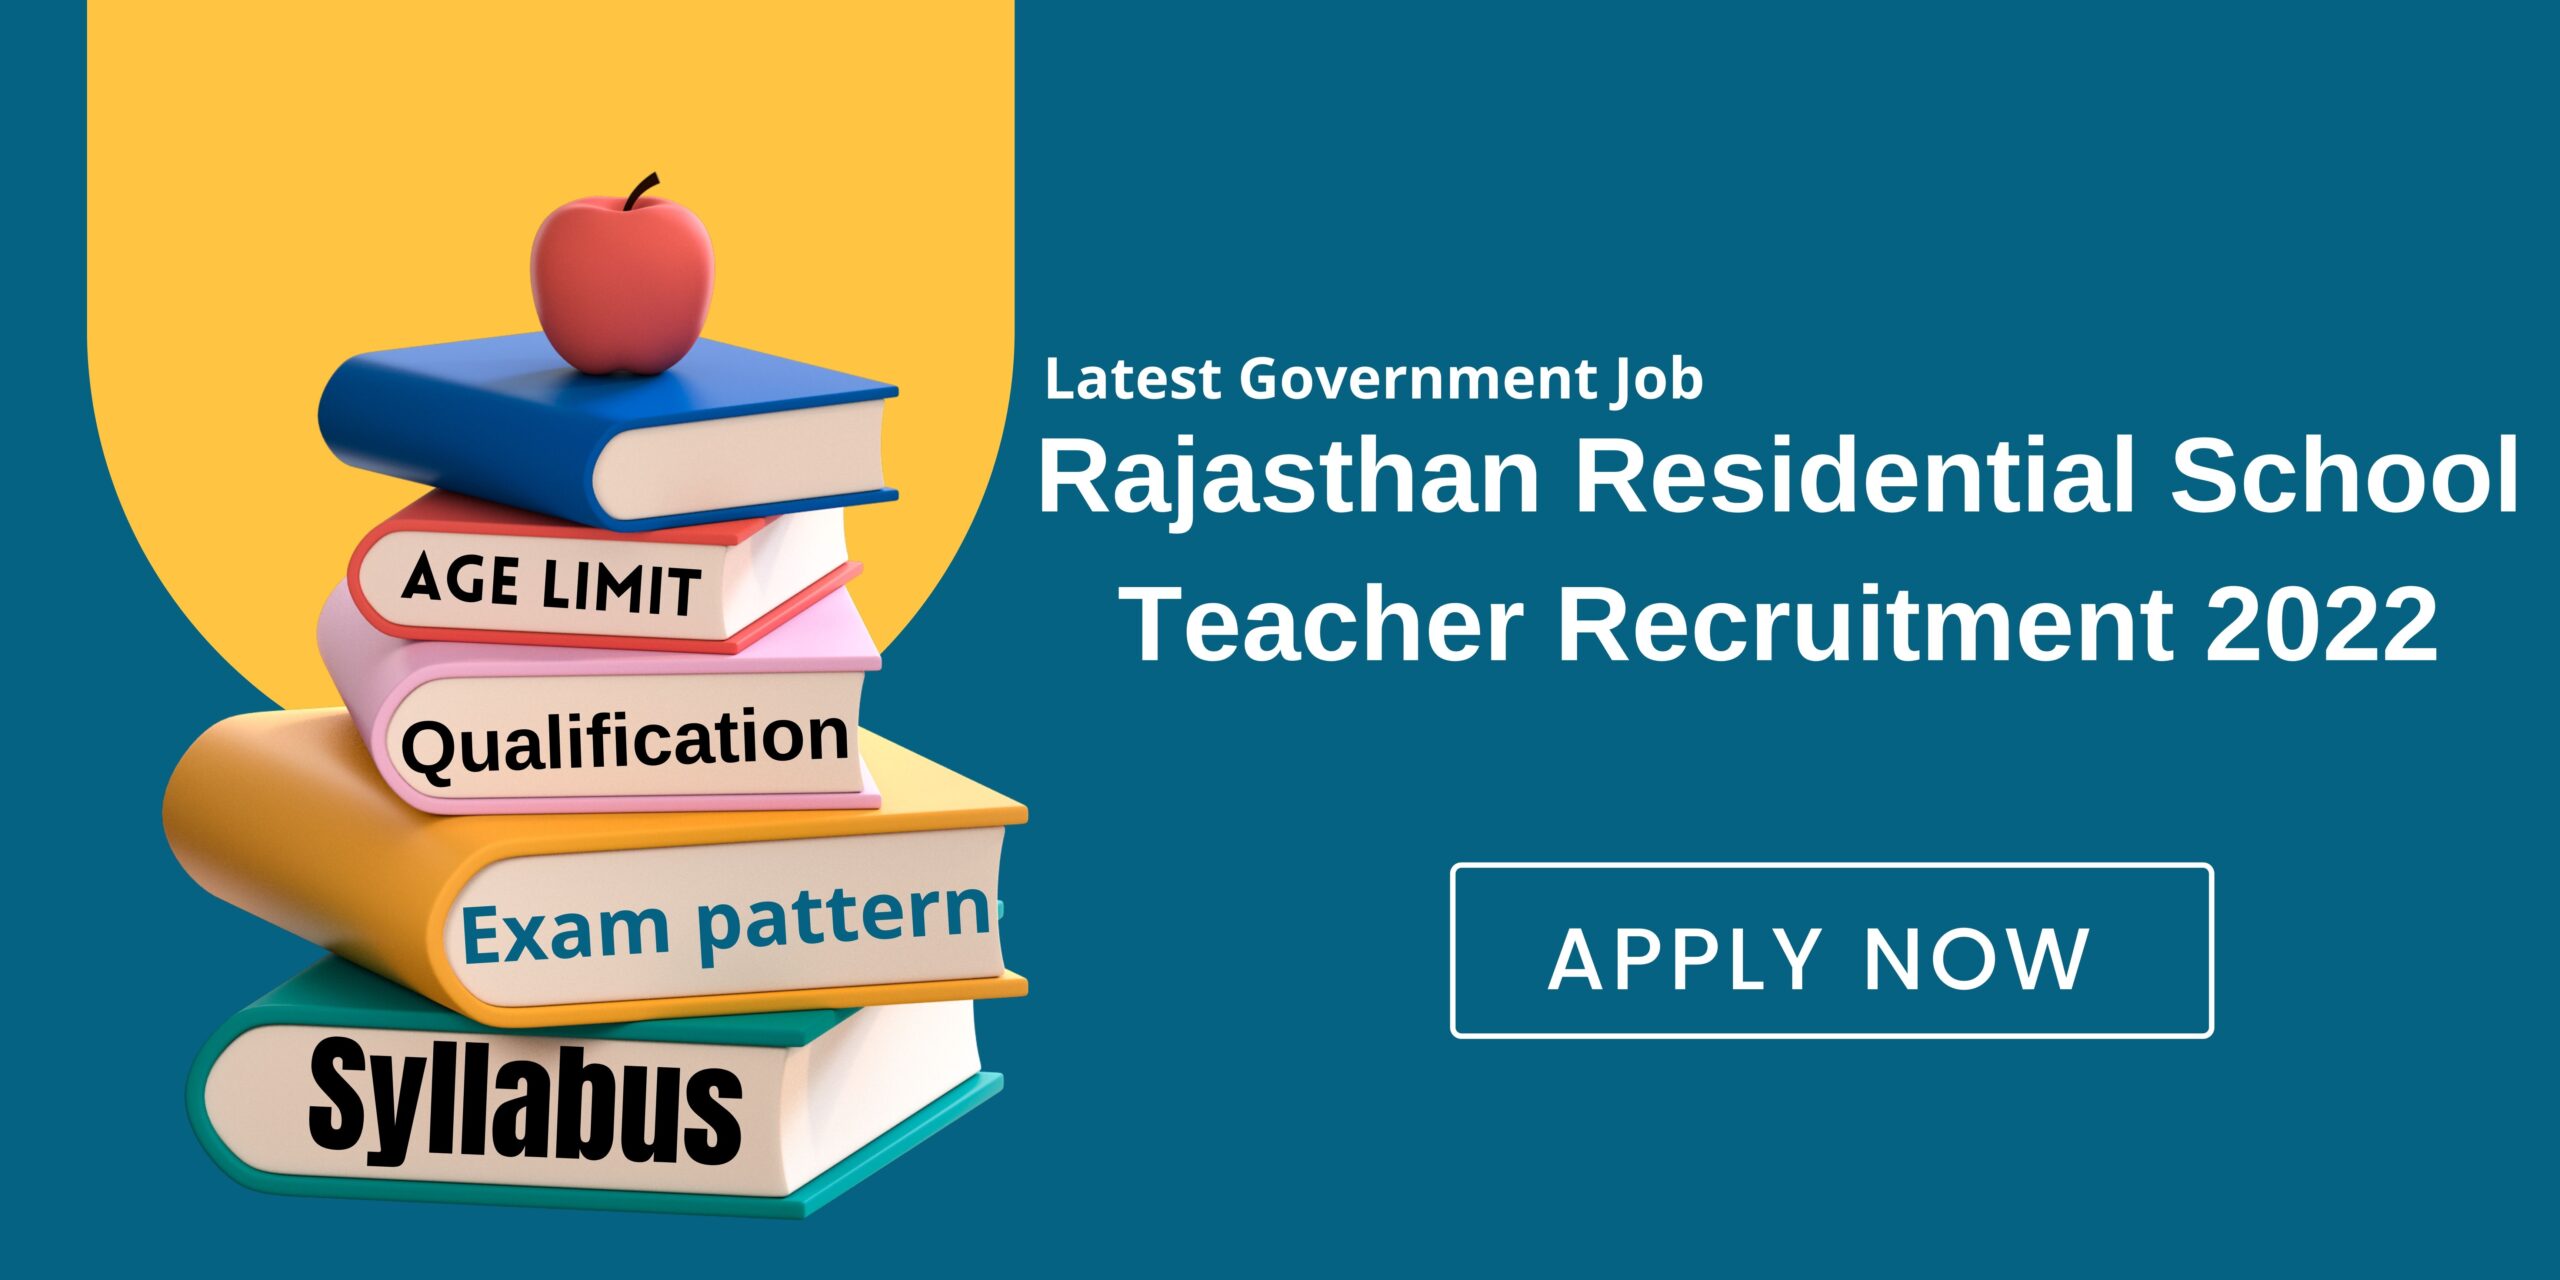 Rajasthan Residential School Teacher Recruitment 2022